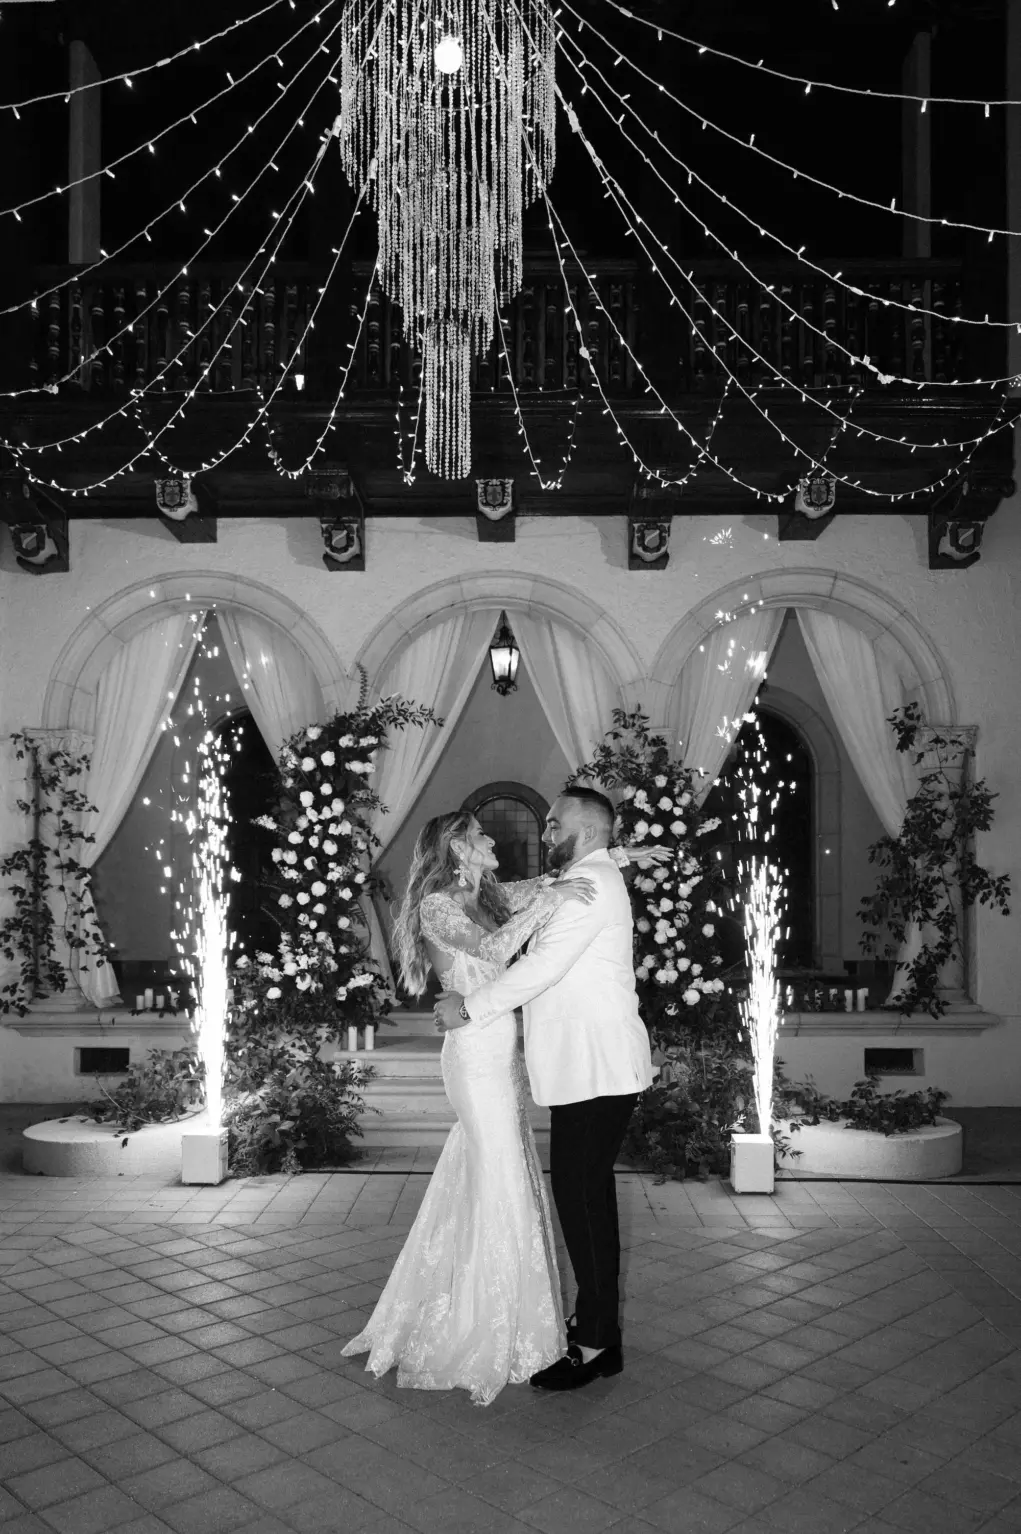 Bride and Groom Private Last Dance Wedding Portrait | Cold Spark Sparkler Machine Wedding Reception Entertainment Ideas | Sarasota Event Venue Powel Crosley Estate | Videographer Shannon Kelly Films